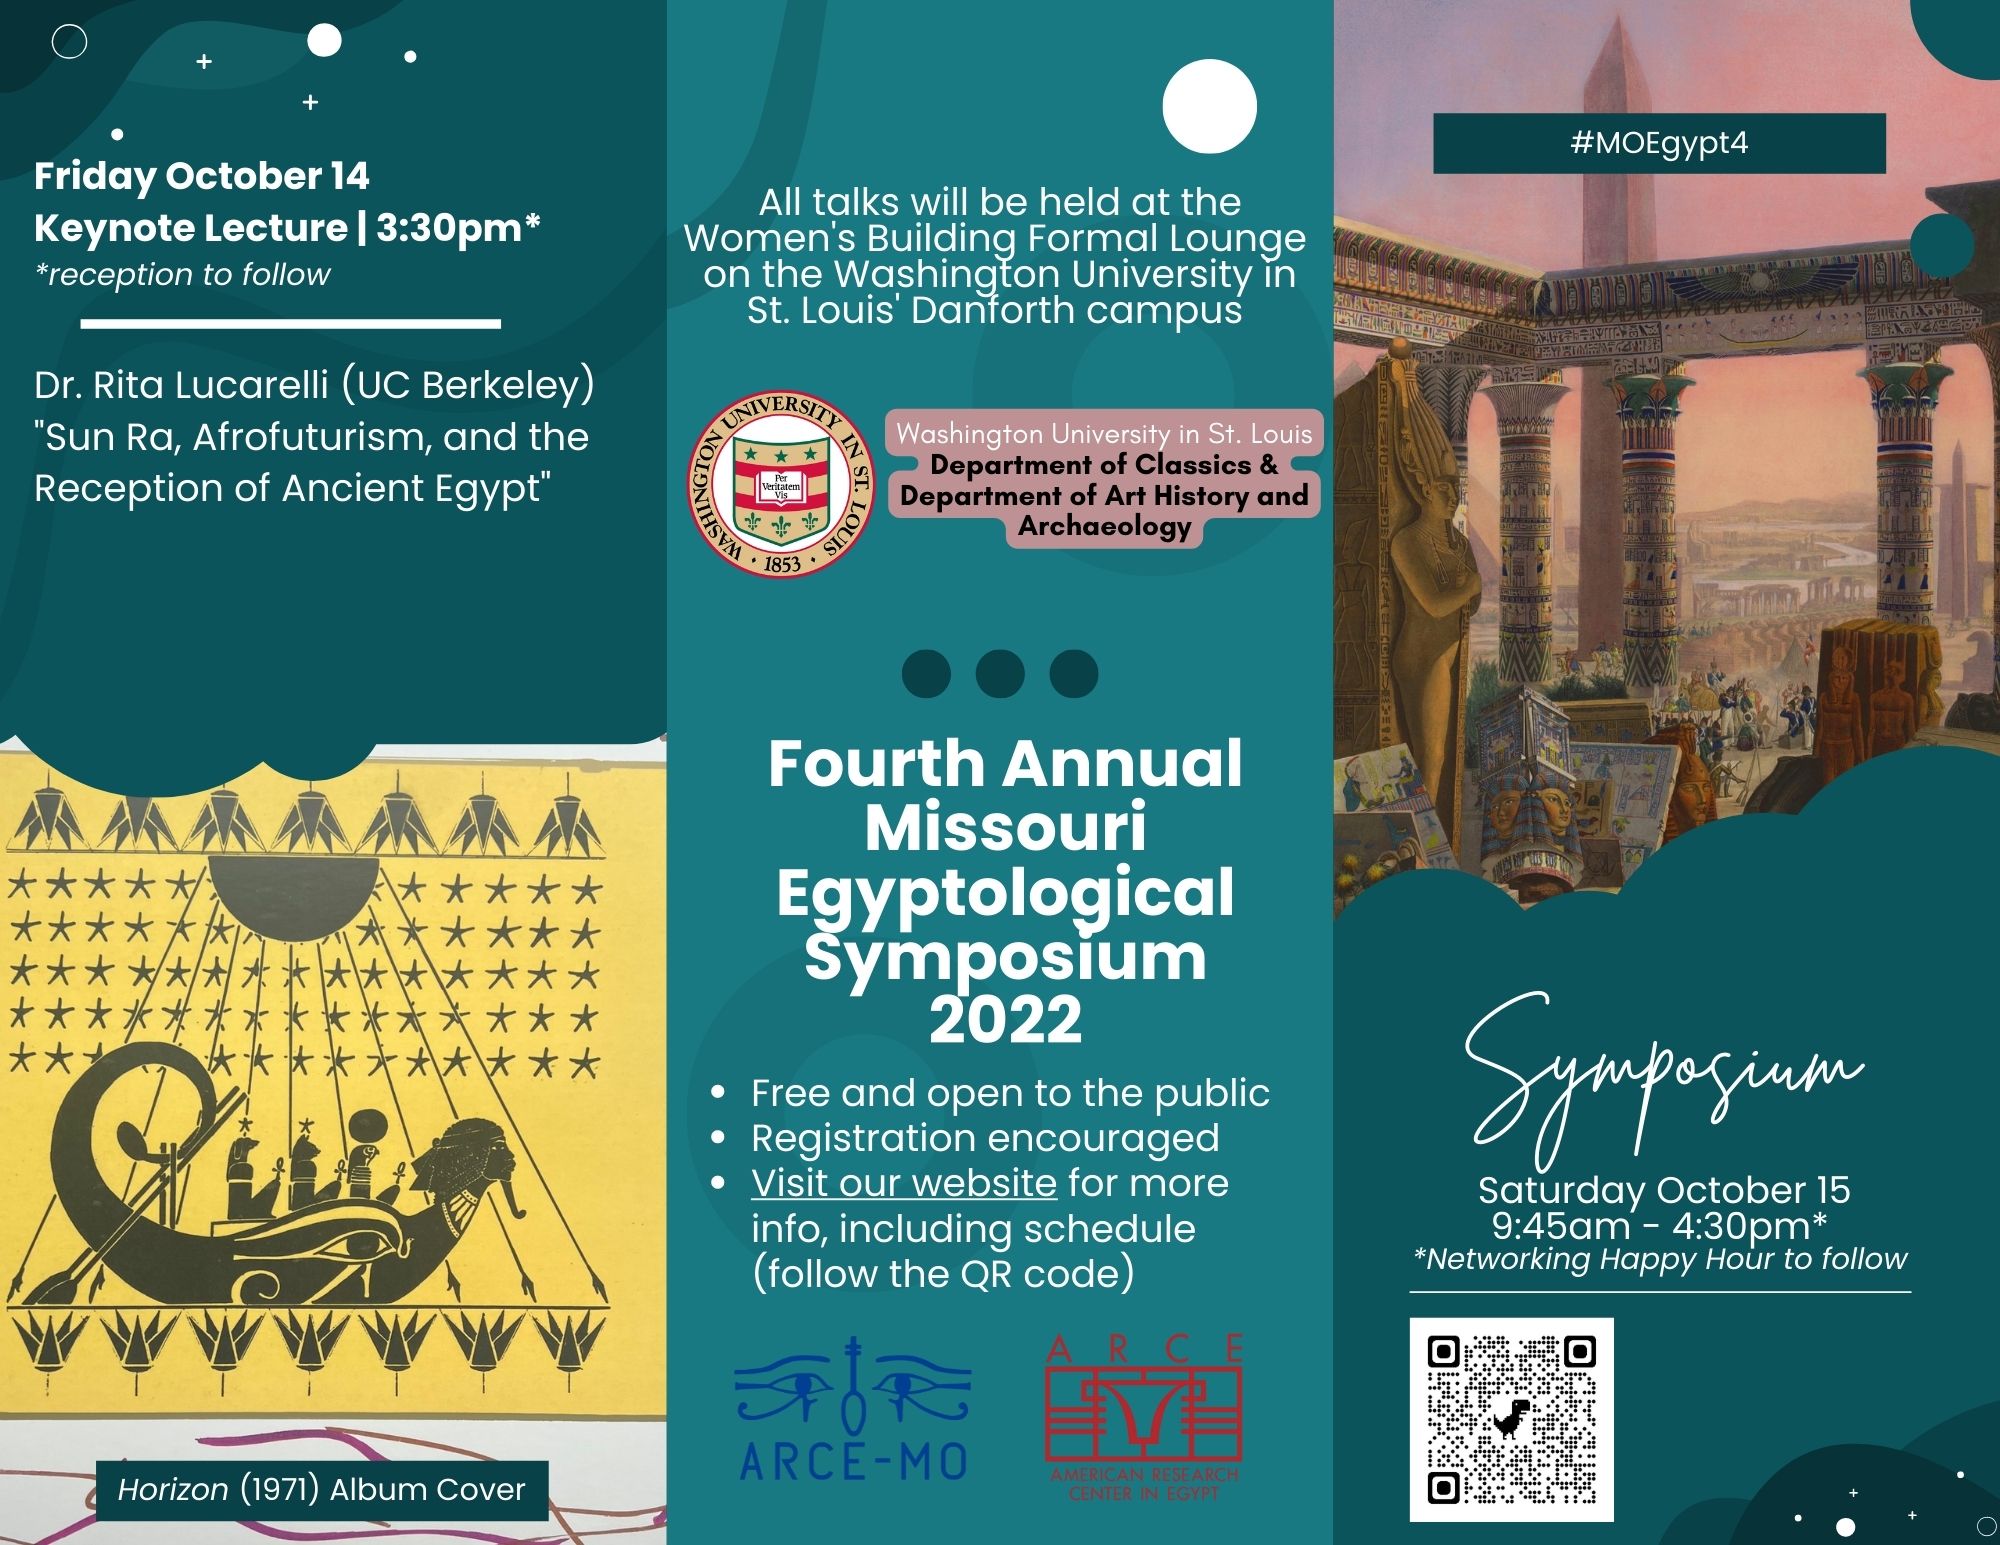 Missouri Egyptological Symposium in St. Louis